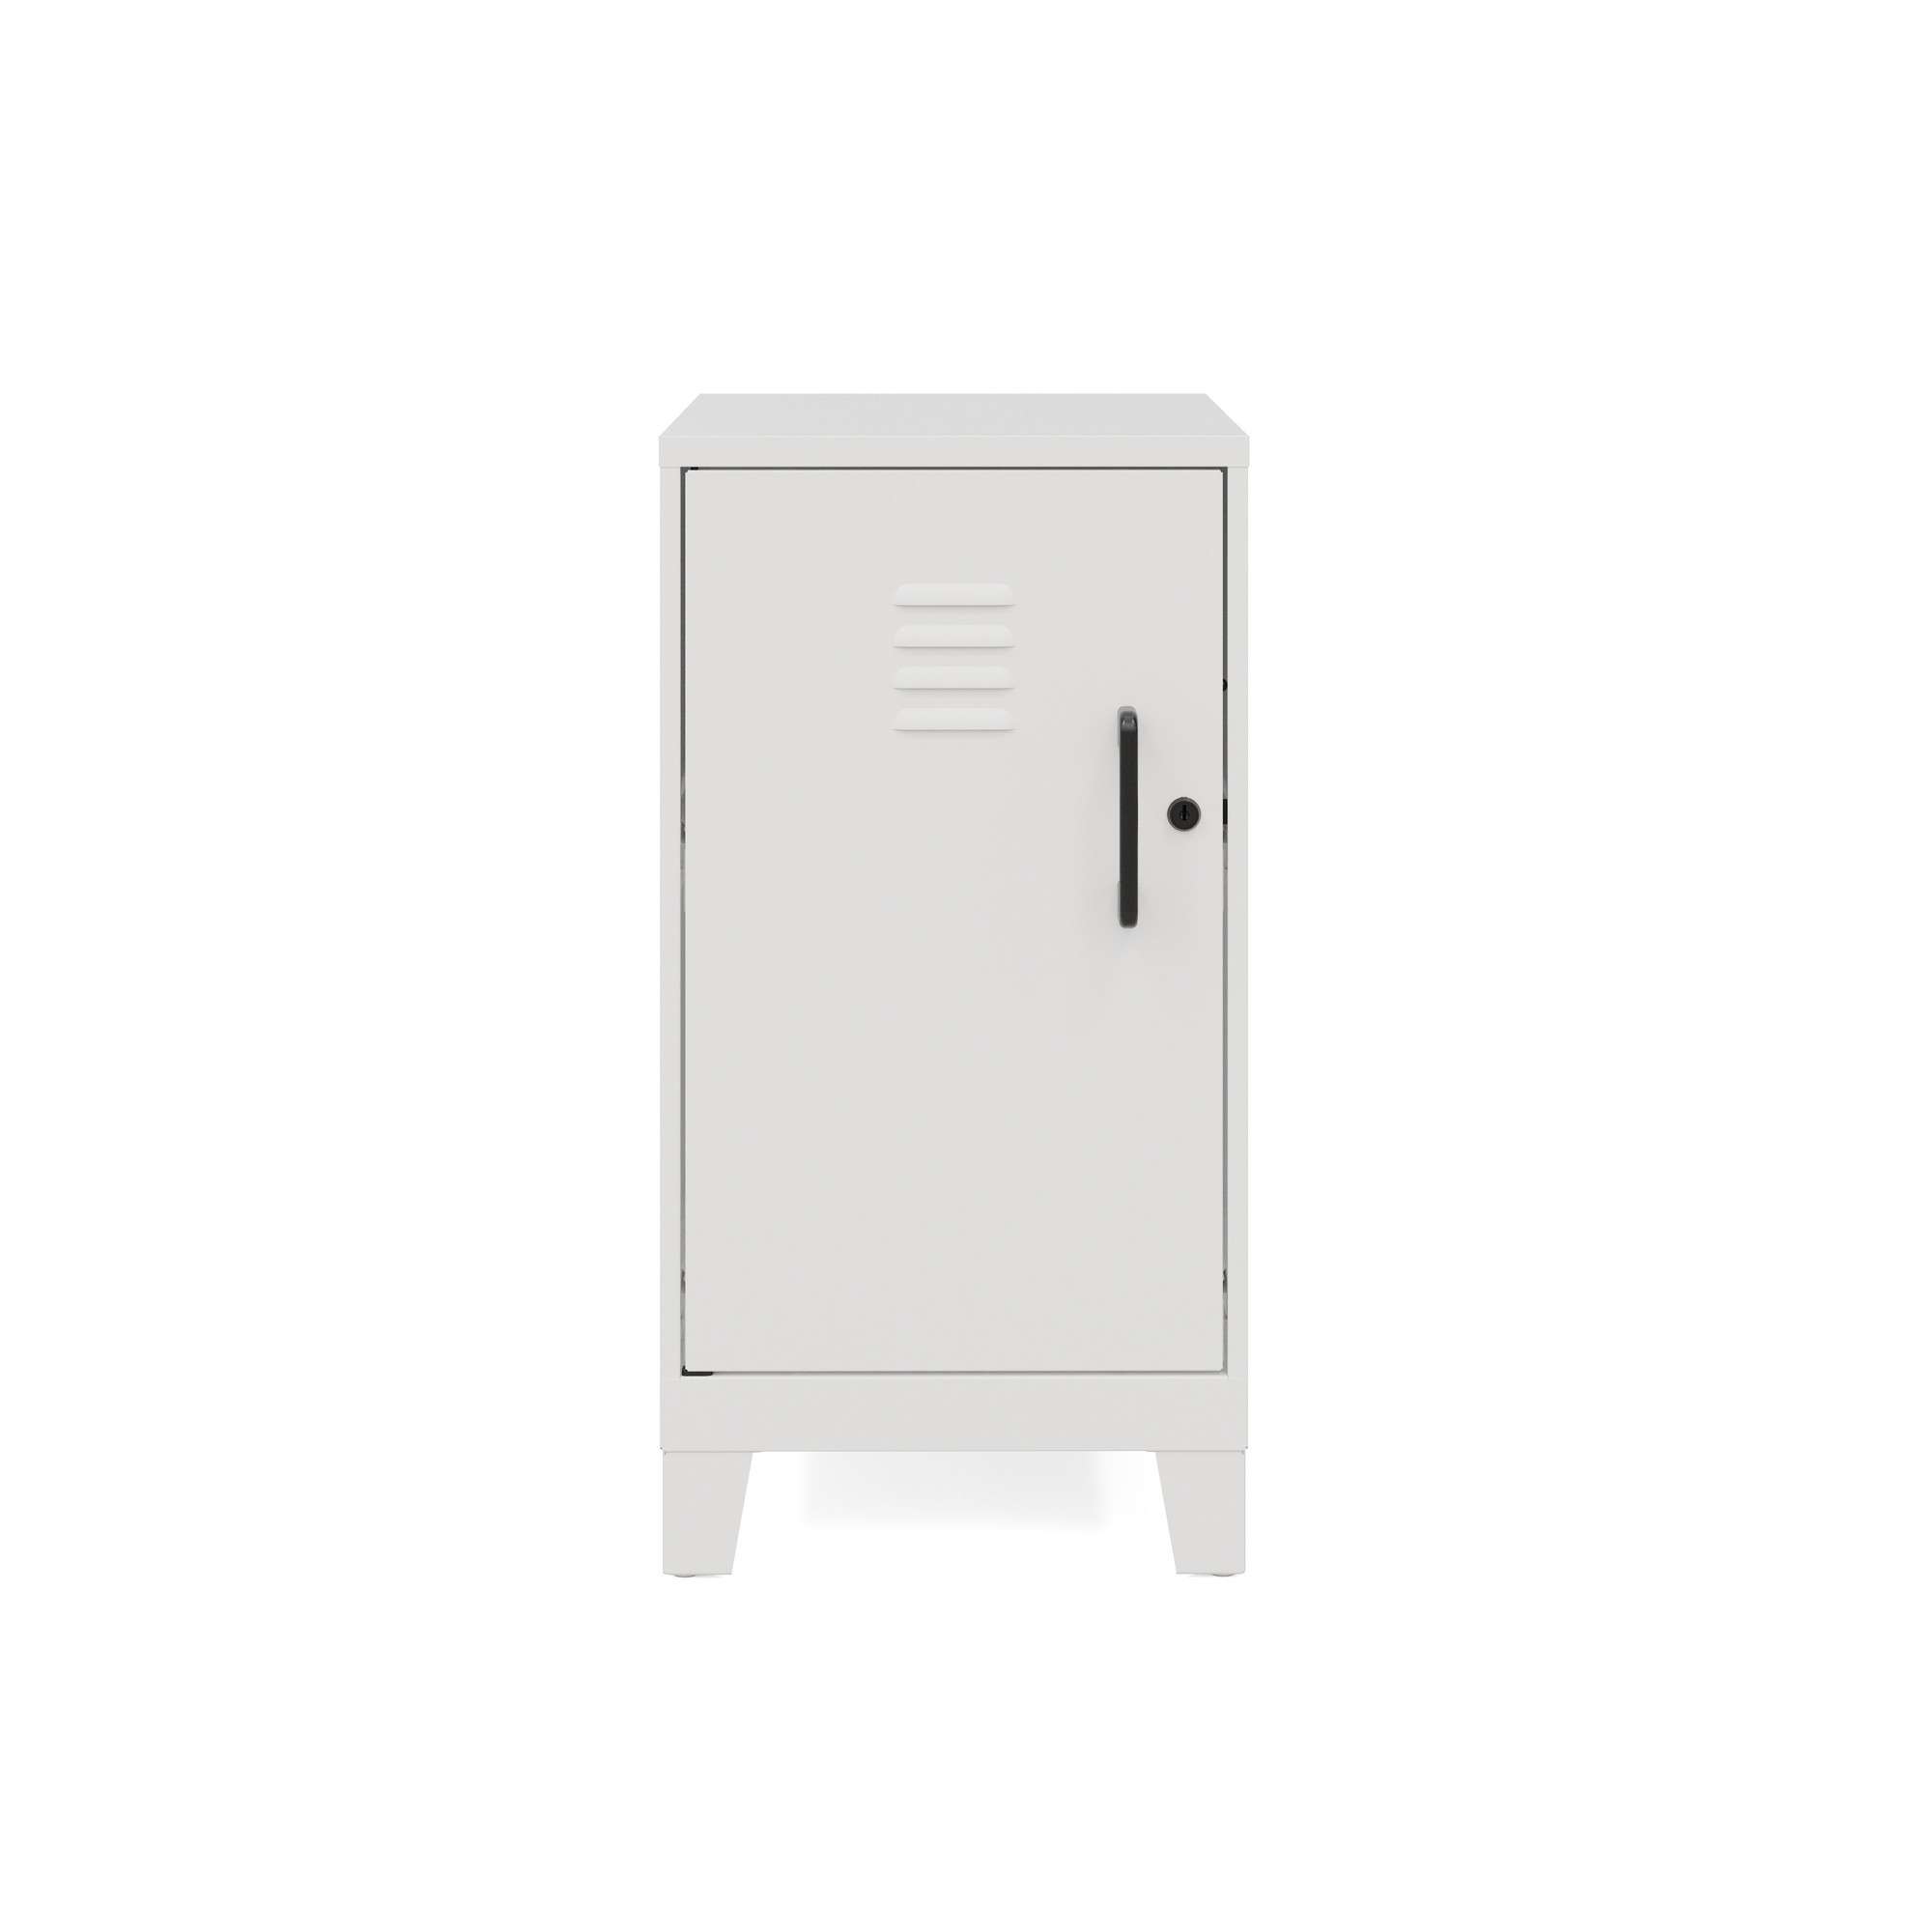 Hirsh Industries, 2 Shelf Mini Storage Locker Cabinet, Height 27.5 in, Width 14.25 in, Color Off White, Model 25220